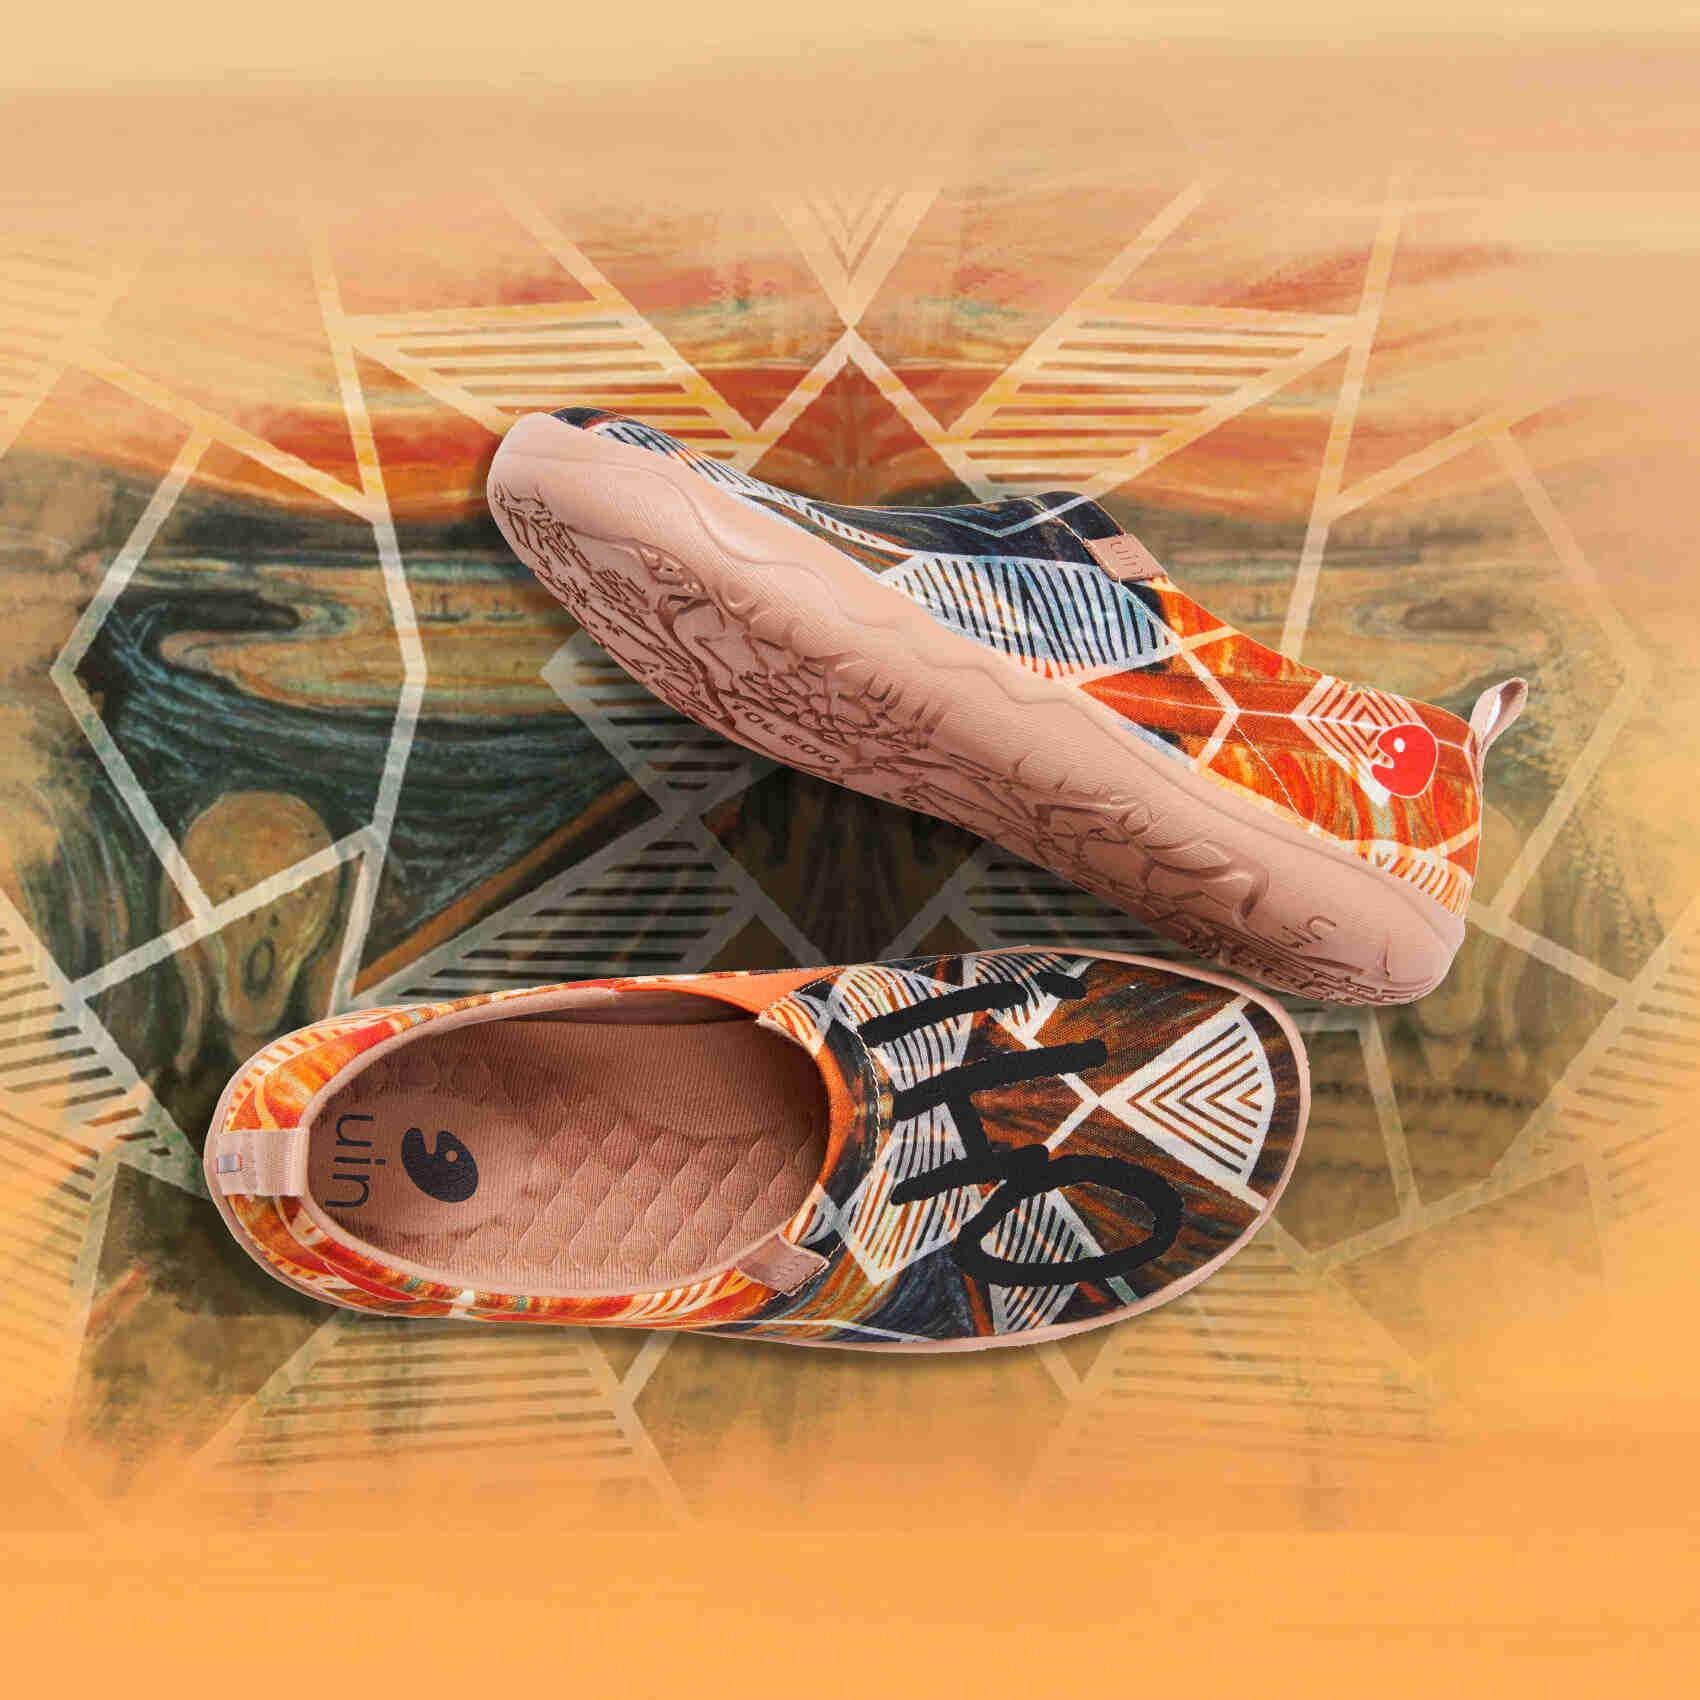 UIN Footwear Men (Pre-sale) Scream Canvas loafers